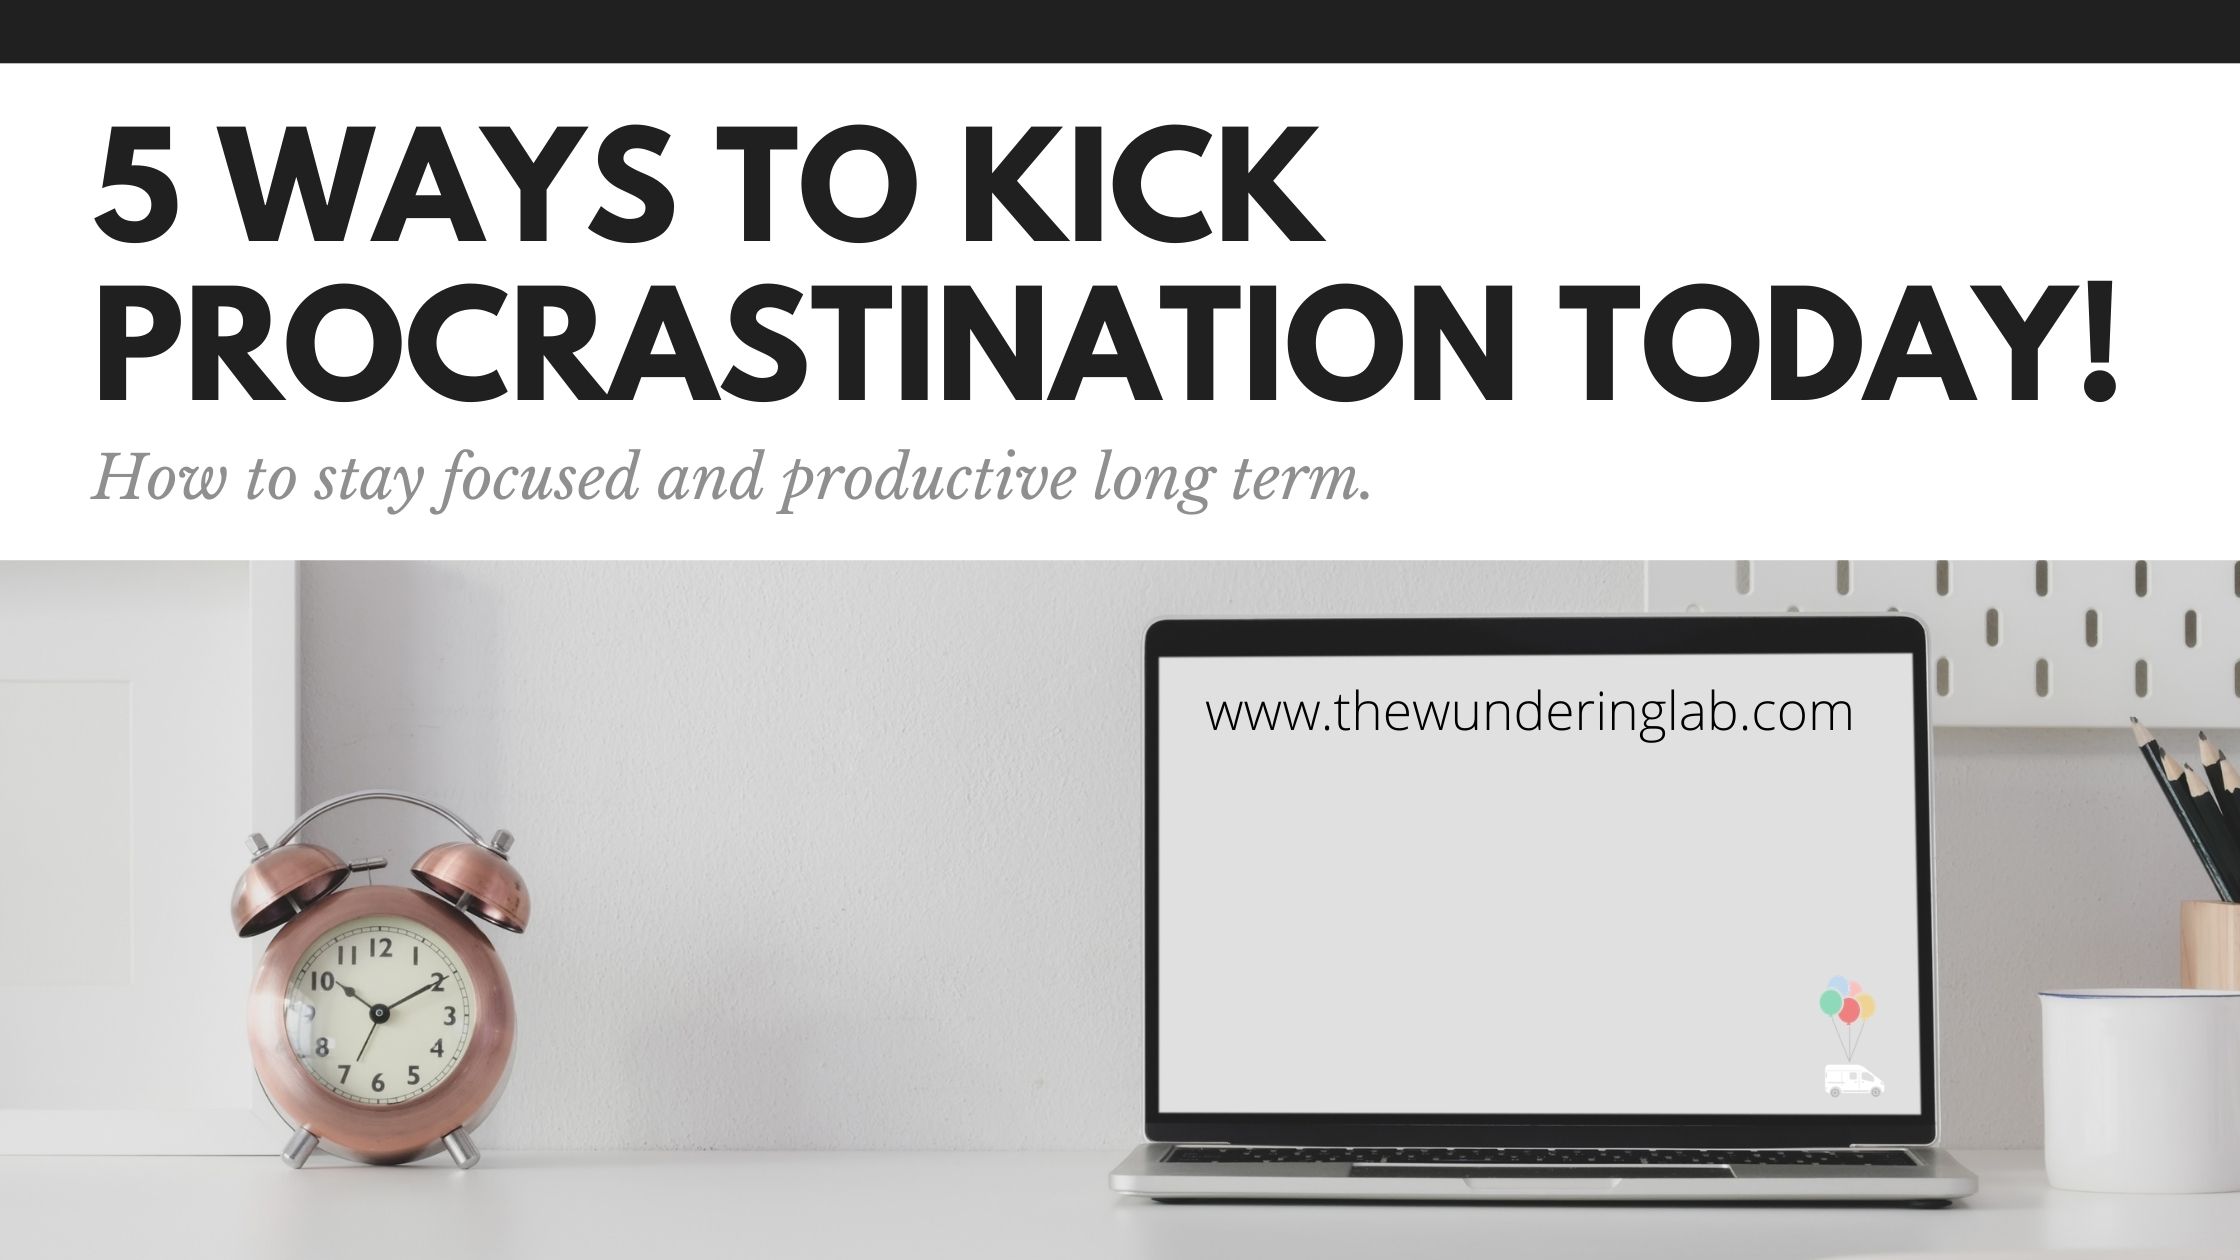 5 ways to kick procrastination today!